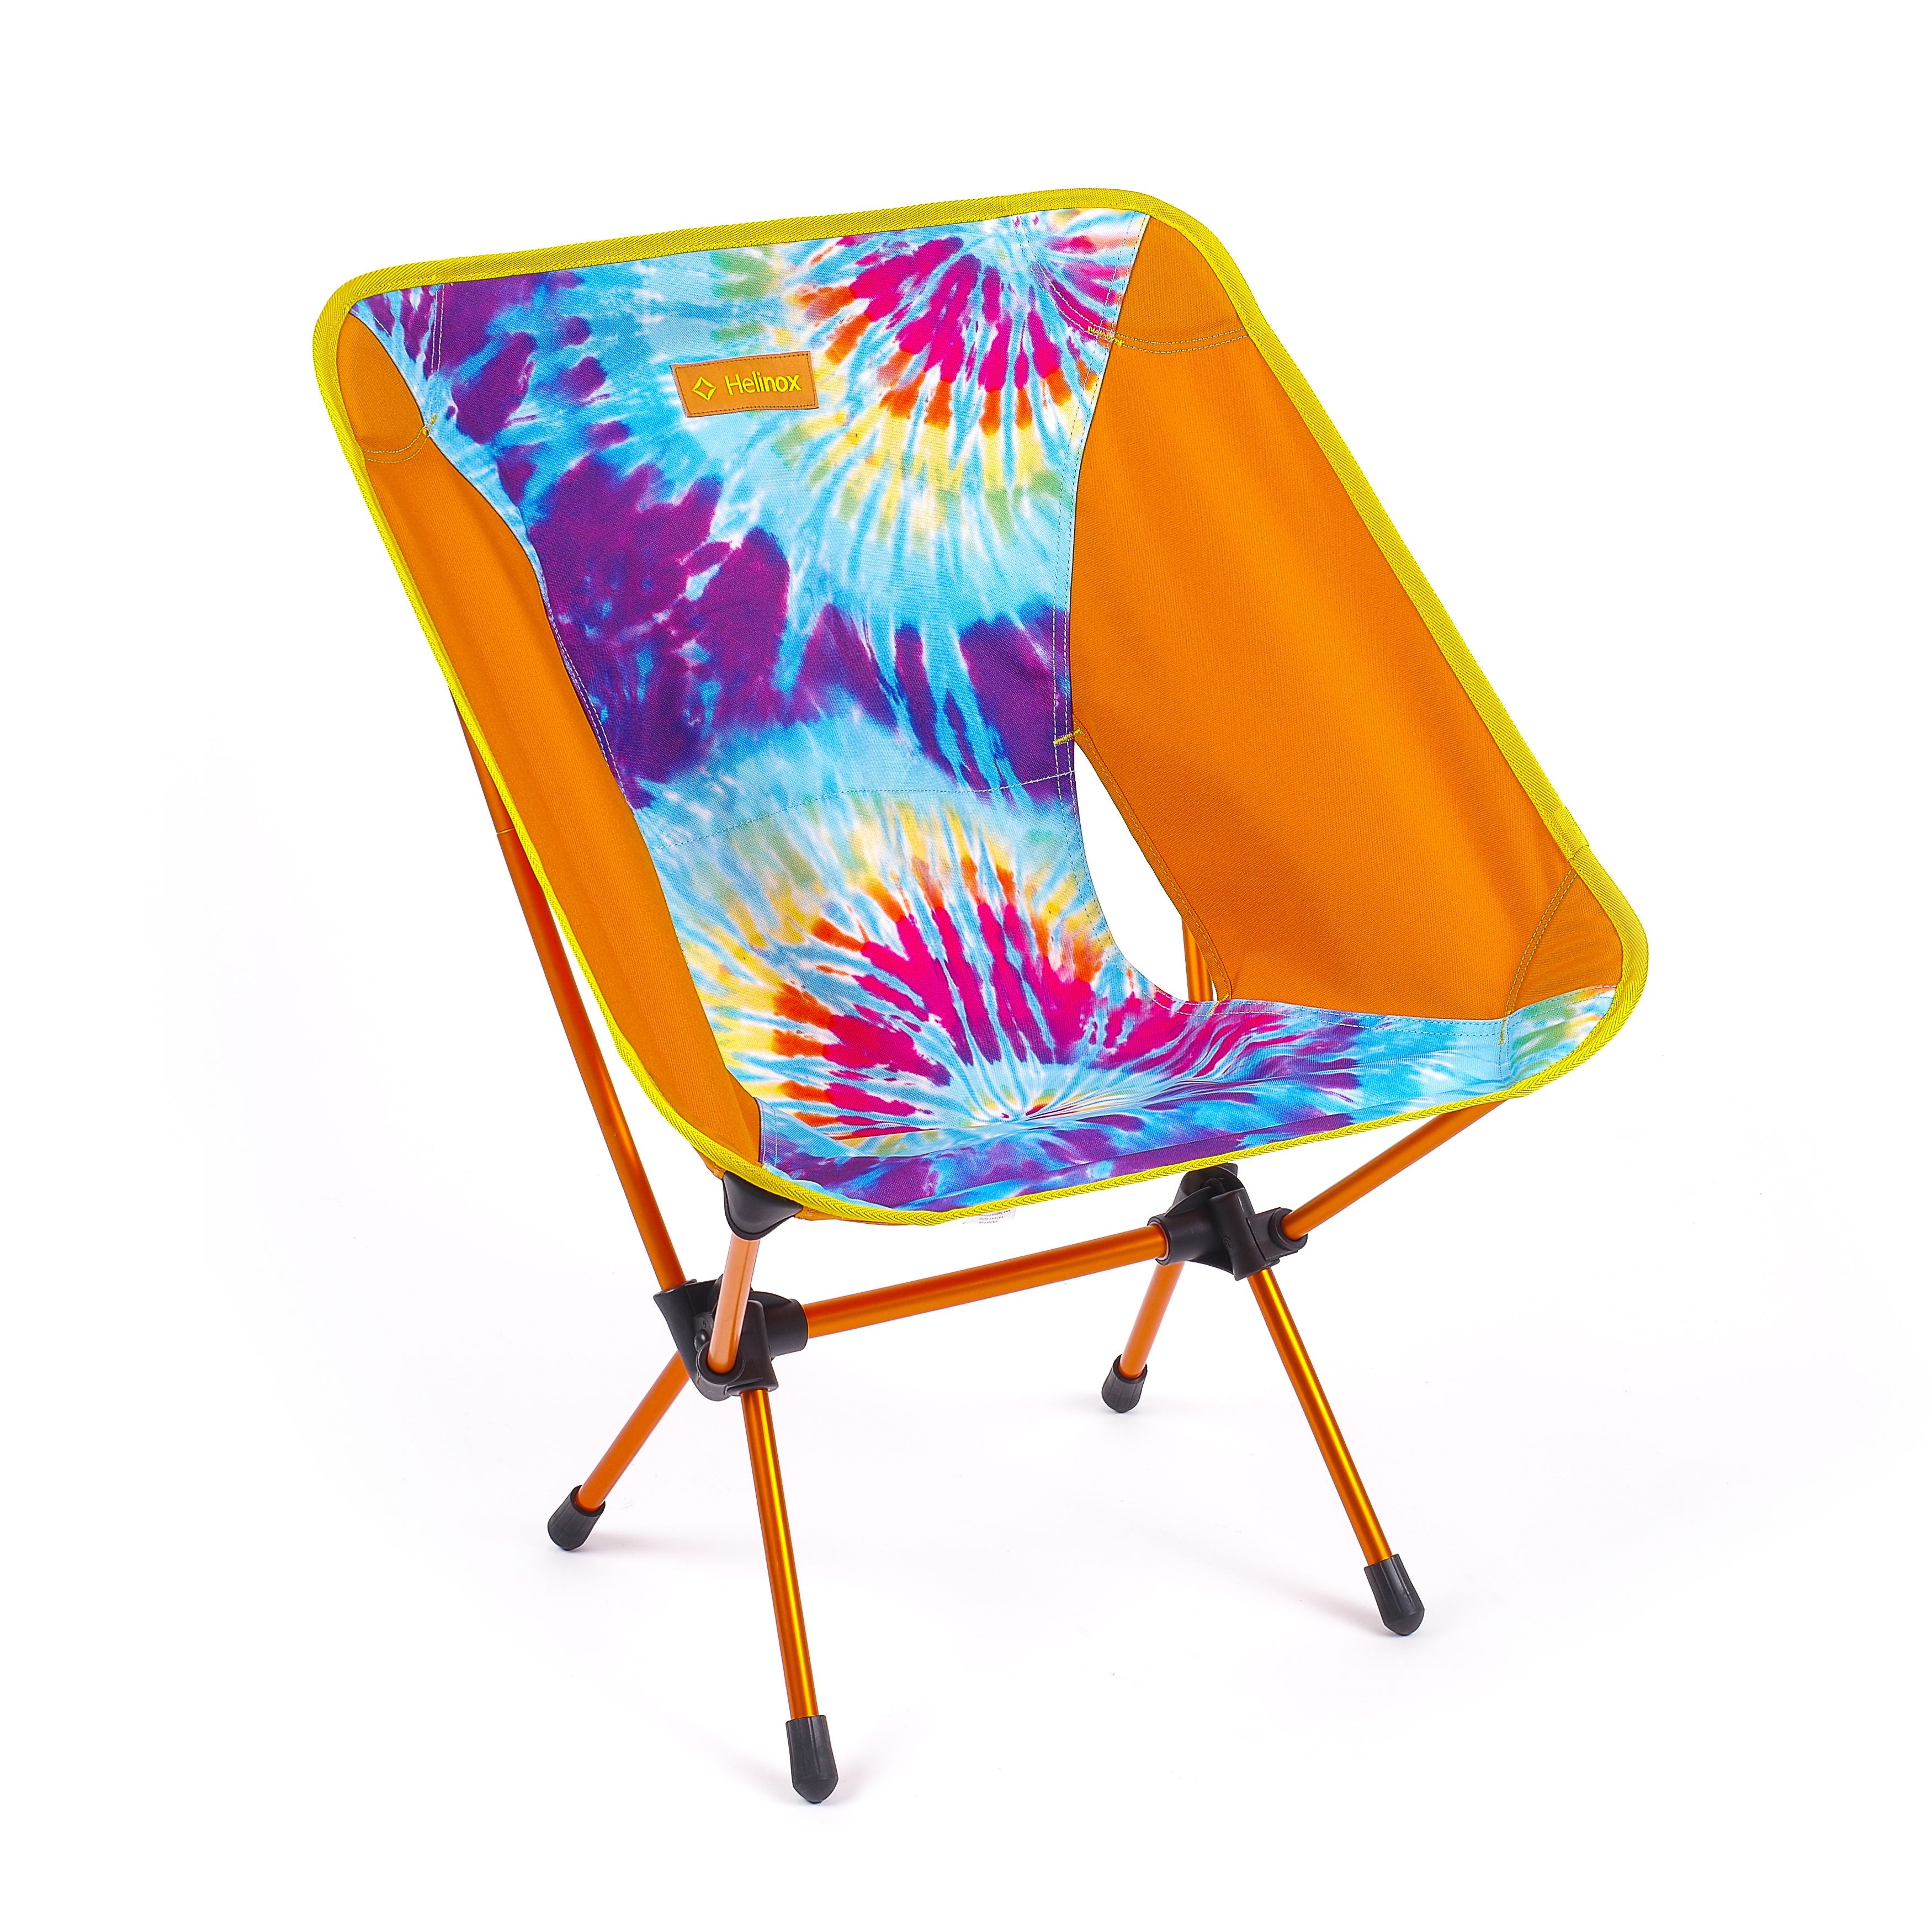 Chair One - Tie Dye